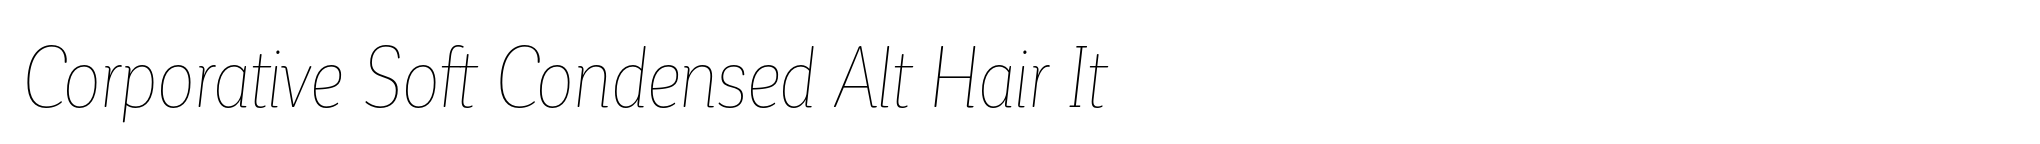 Corporative Soft Condensed Alt Hair It image